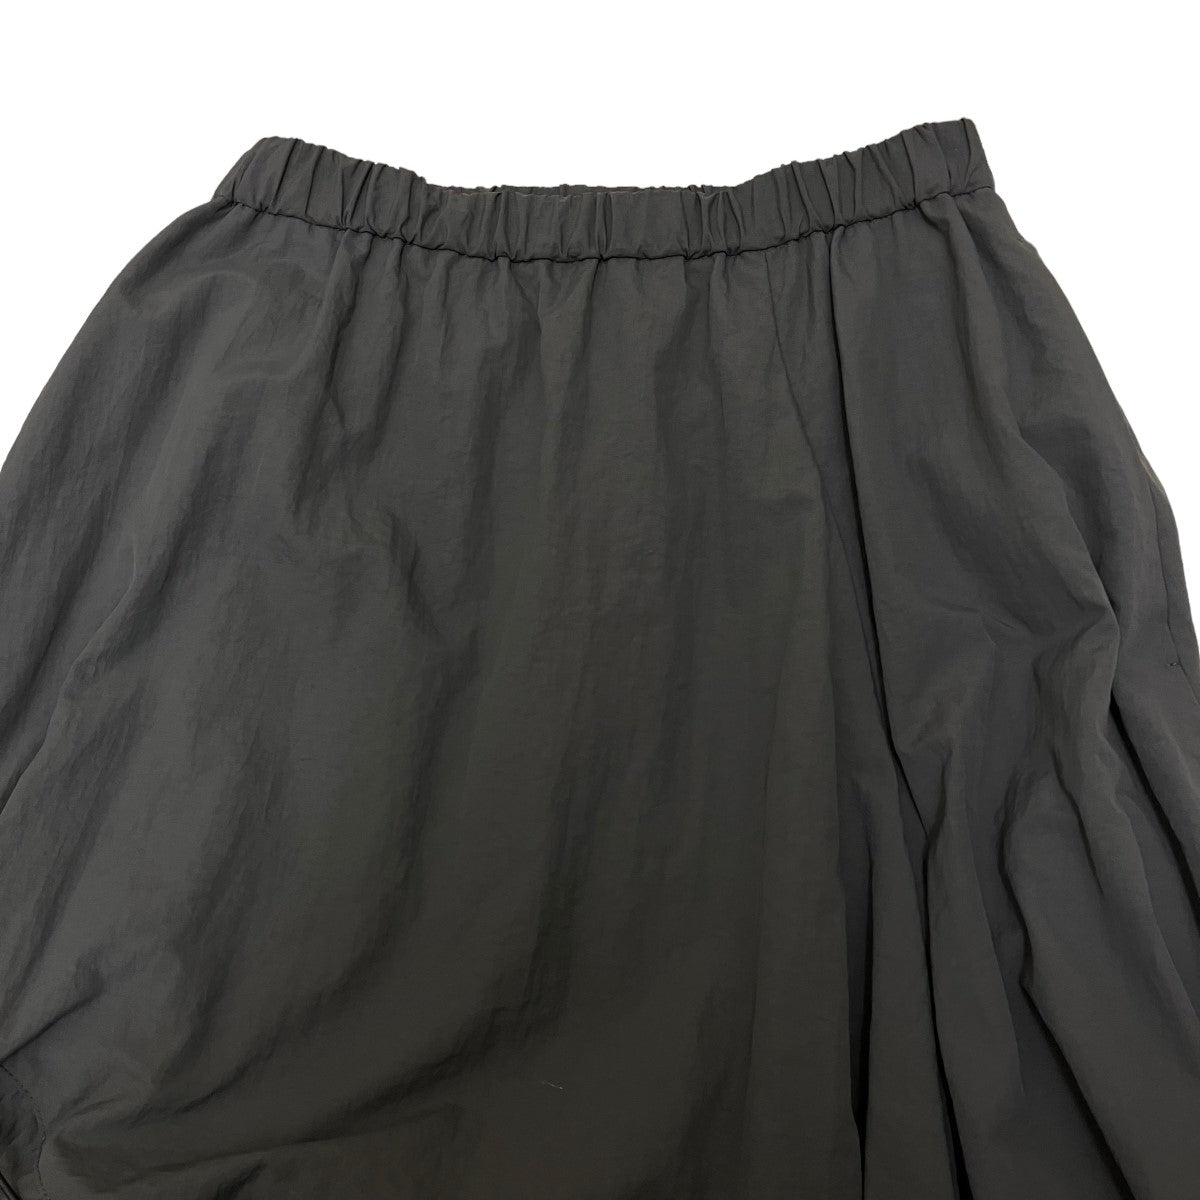 nagonstans(ナゴンスタンス) asymmetry drawstring skirt470GS431-0360